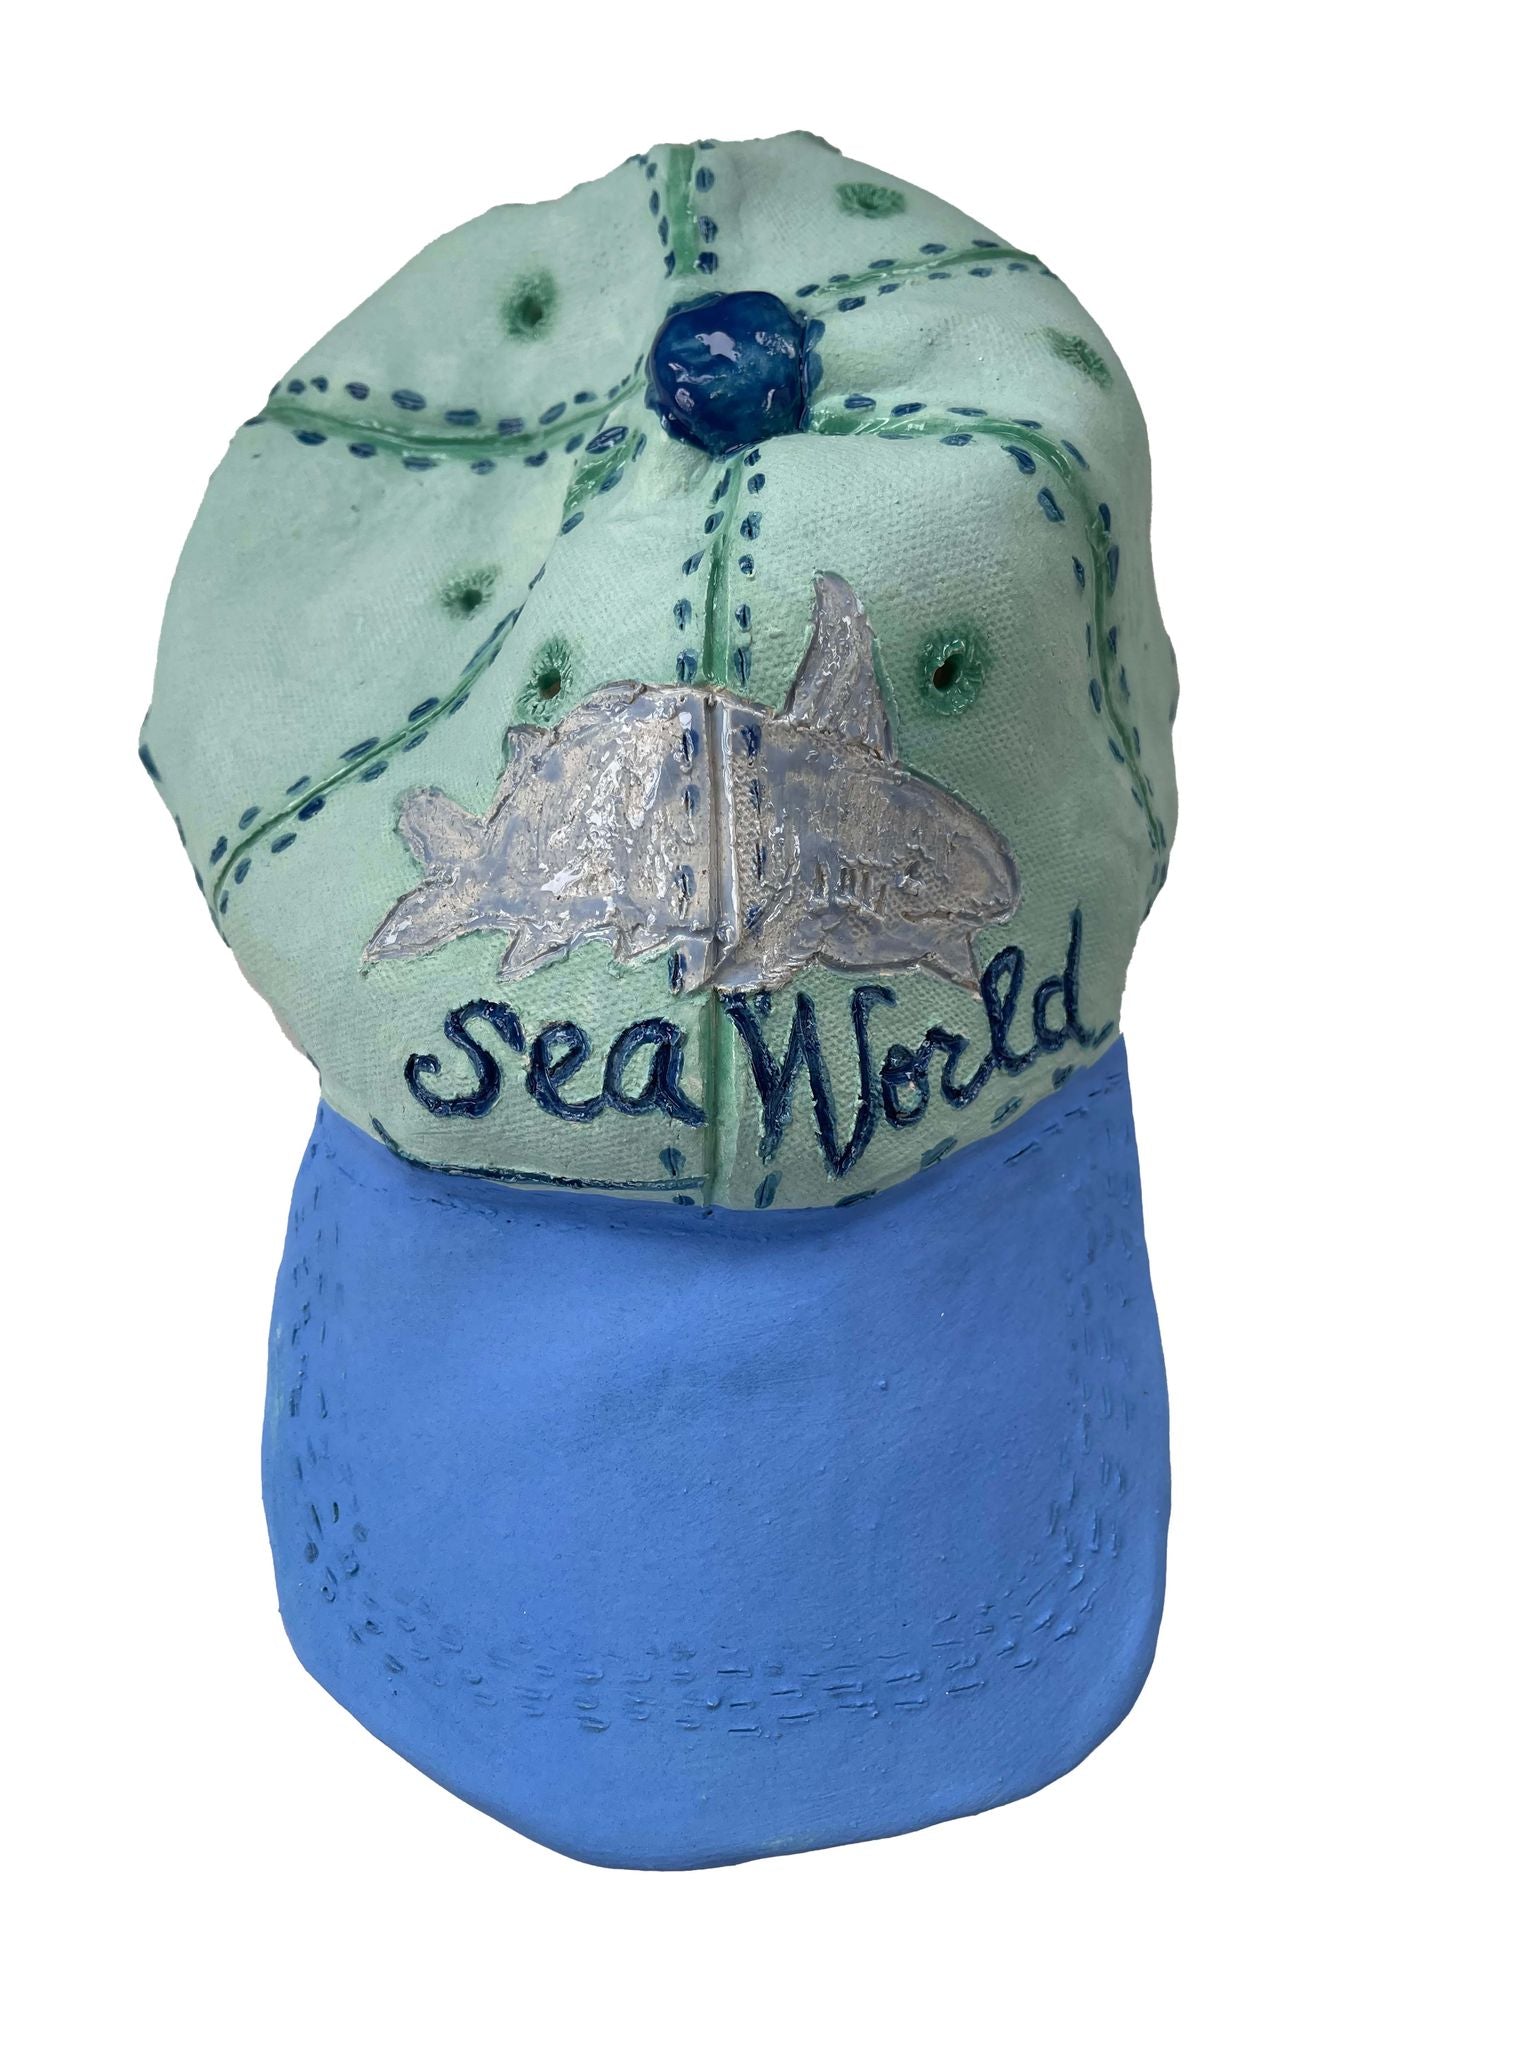 Taylor Lee Nicholson, "Dad Hat (Sea World)"